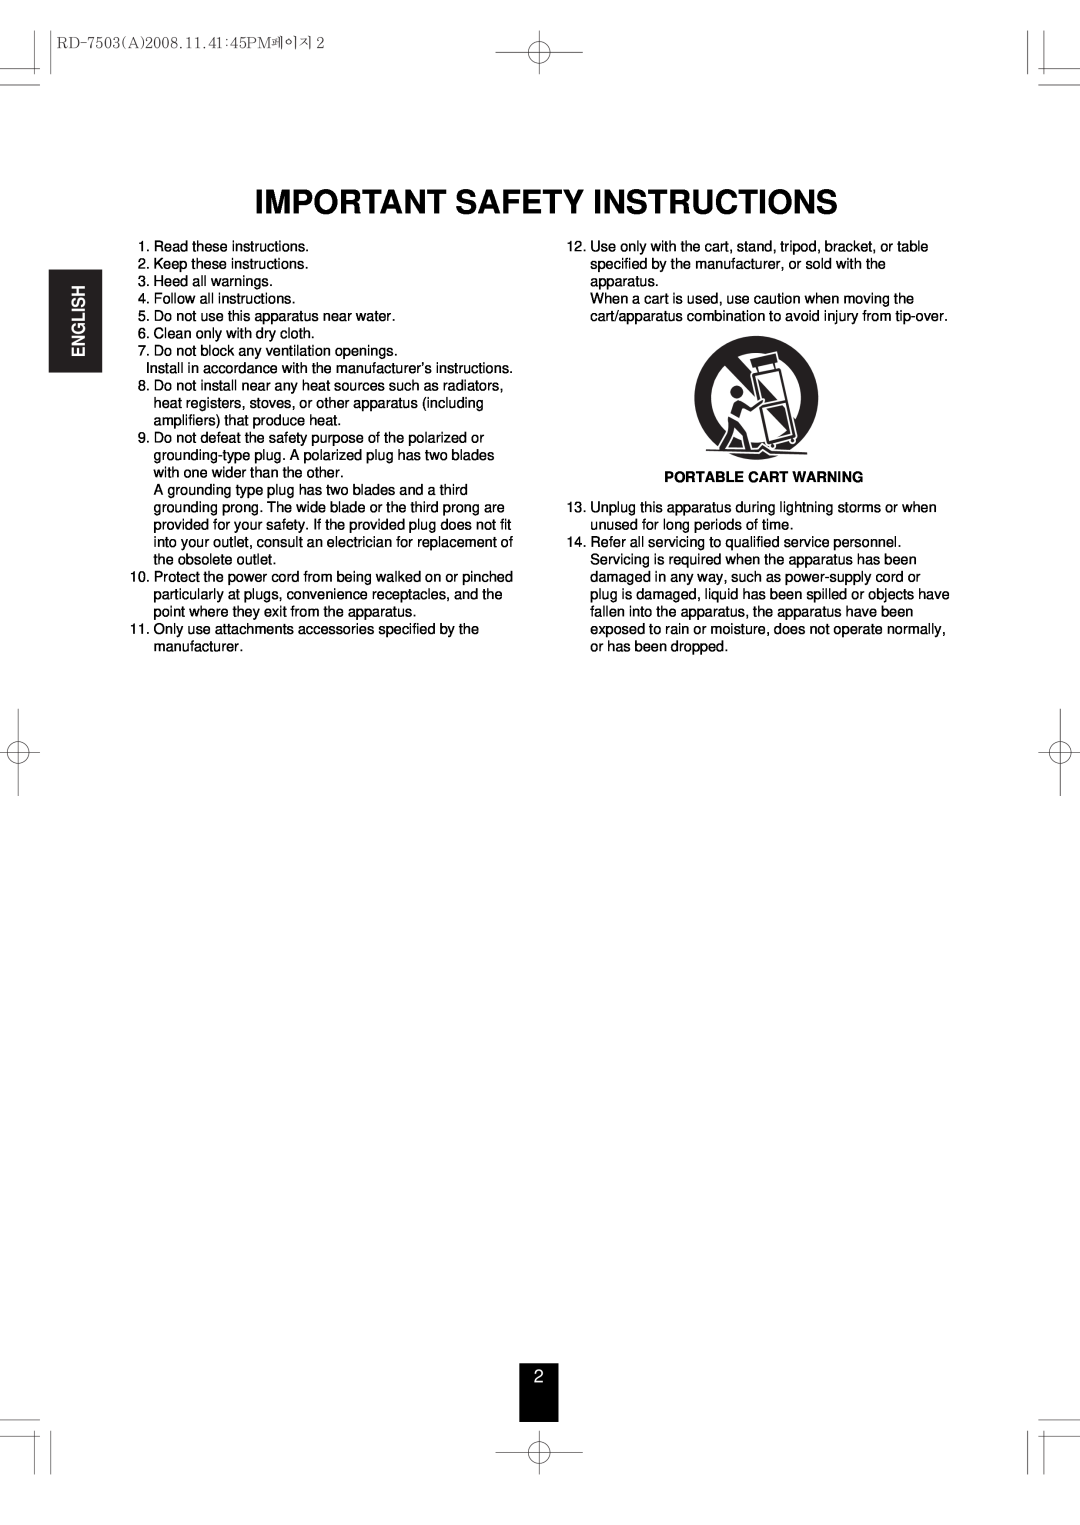 Sherwood manual English, Important Safety Instructions, RD-7503A2008.11.41 45PM페이지, Portable Cart Warning 